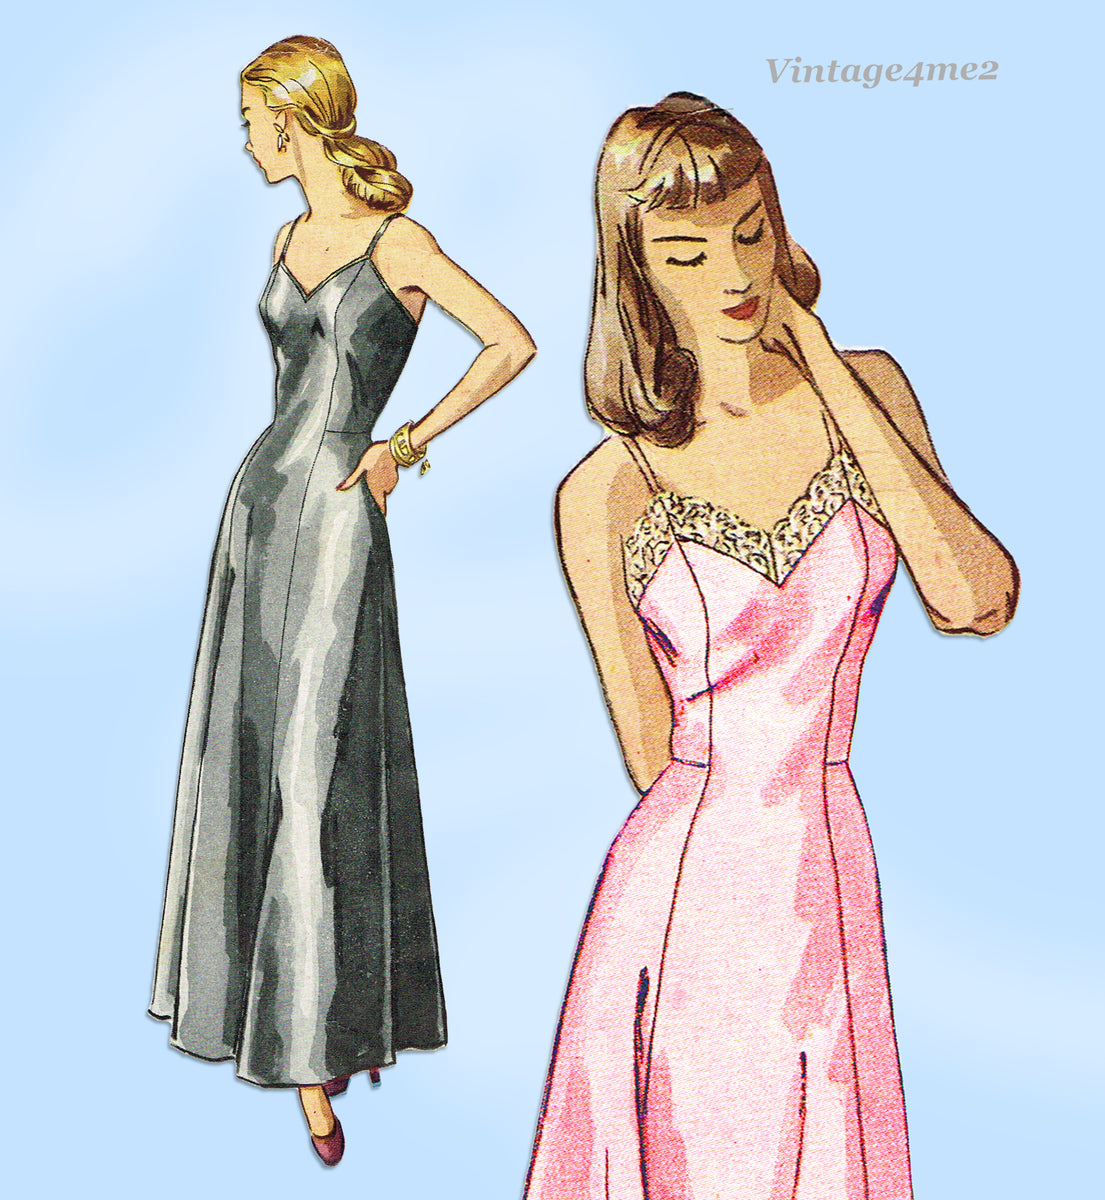 1920s Slip-On Costume Slip Sewing Pattern Bust Size 32-44 Designer  Publishing Company Reproduction, 3582